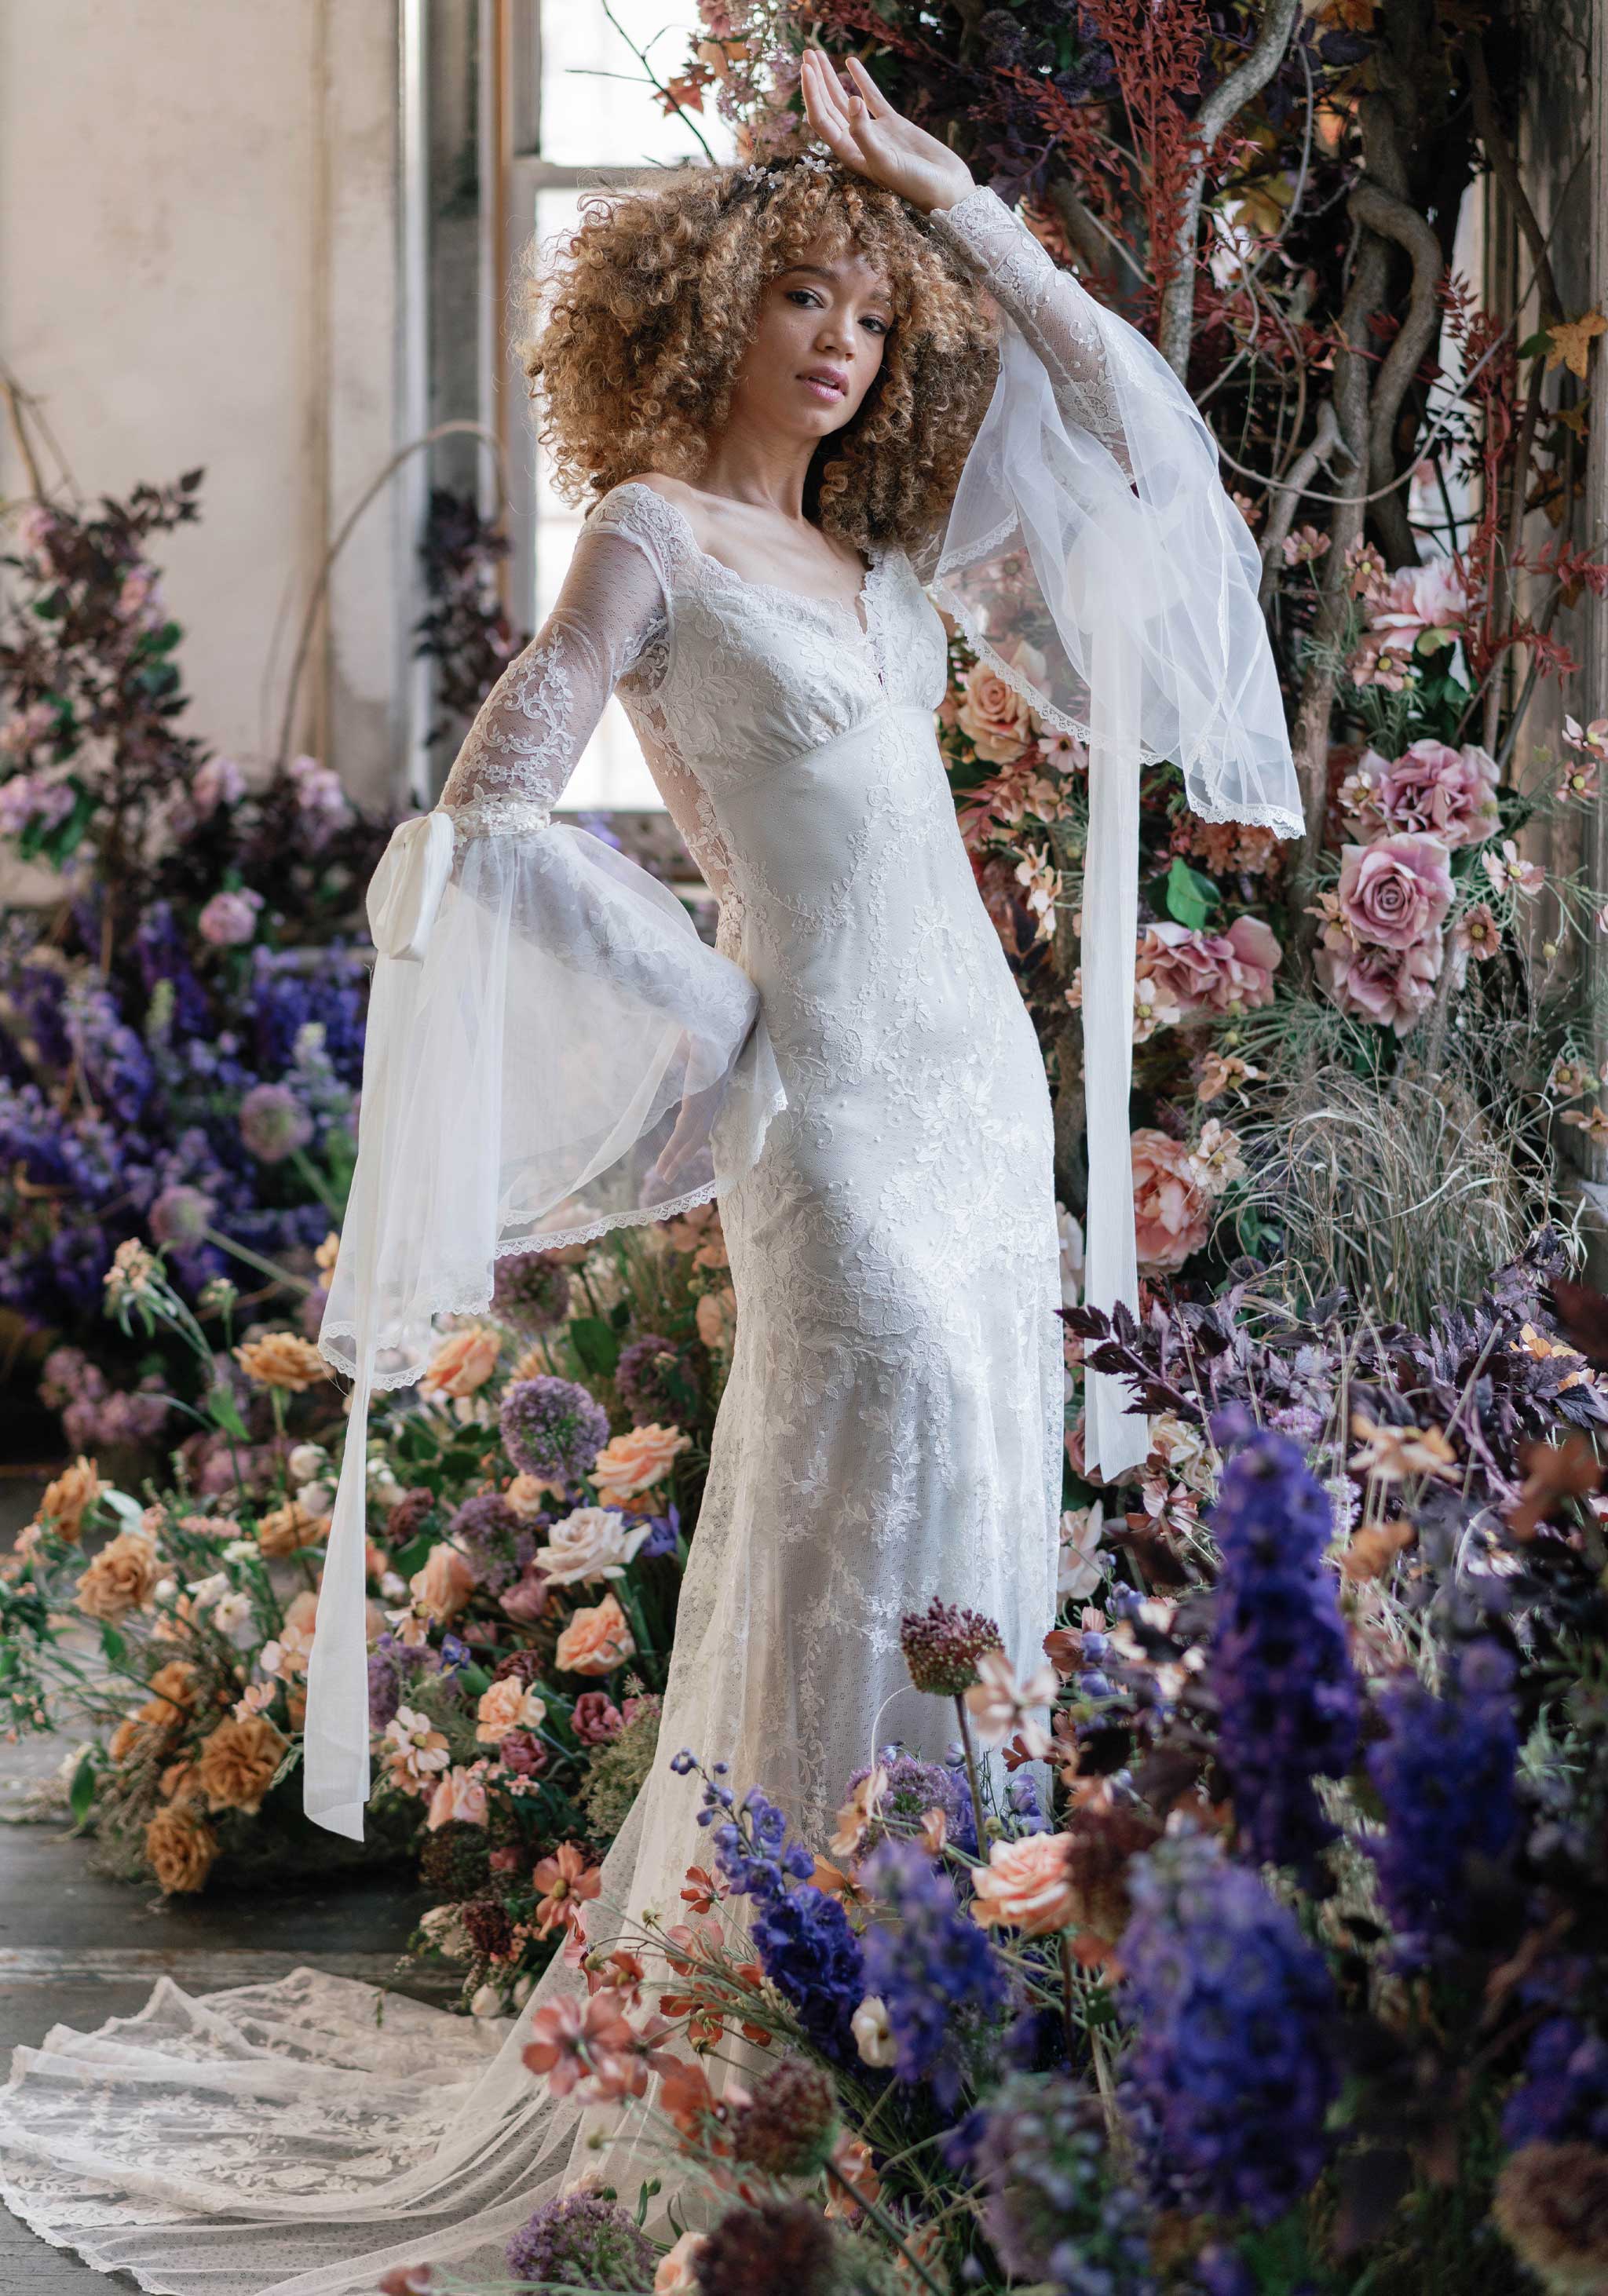 Arabesque Romantic lace wedding dress designed by Claire Pettibone